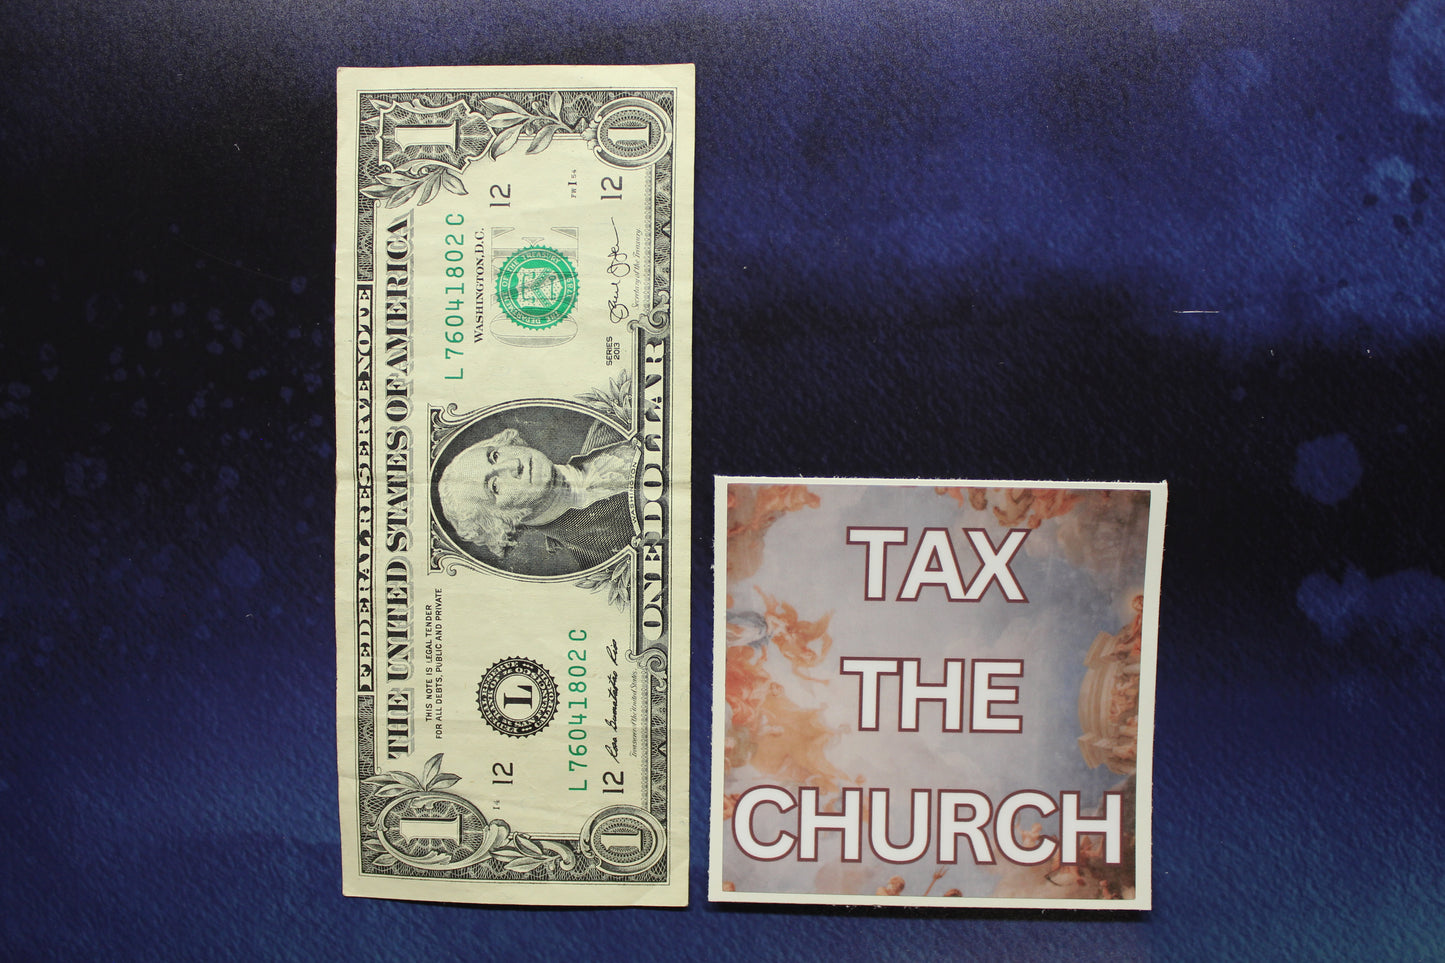 Tax The Church Vinyl Sticker